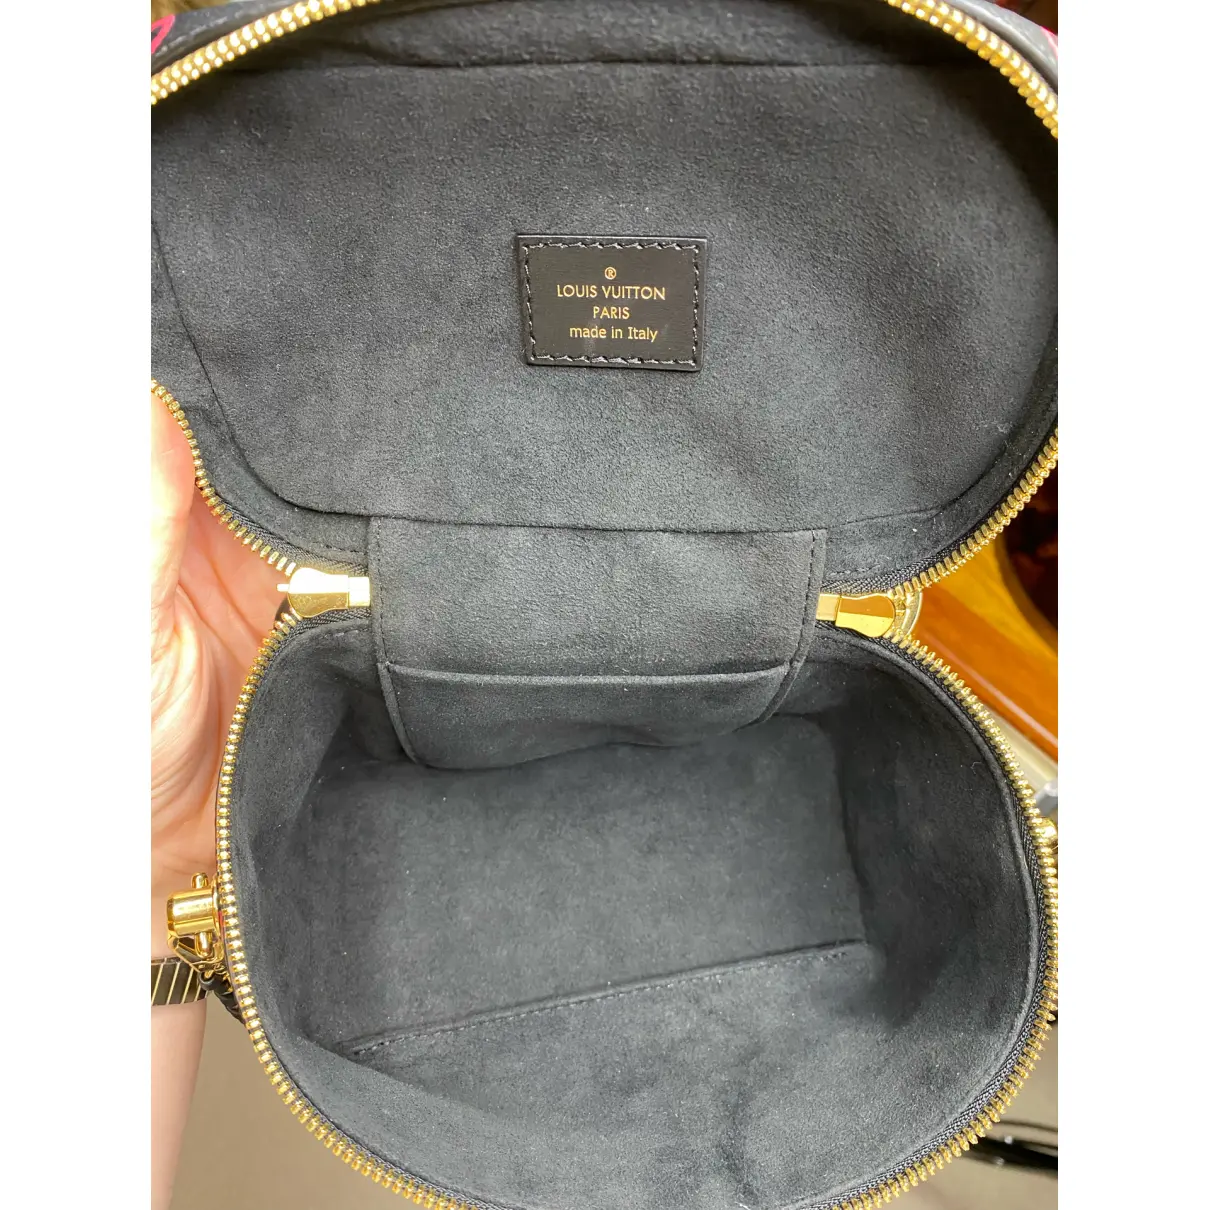 Vanity leather handbag Louis Vuitton